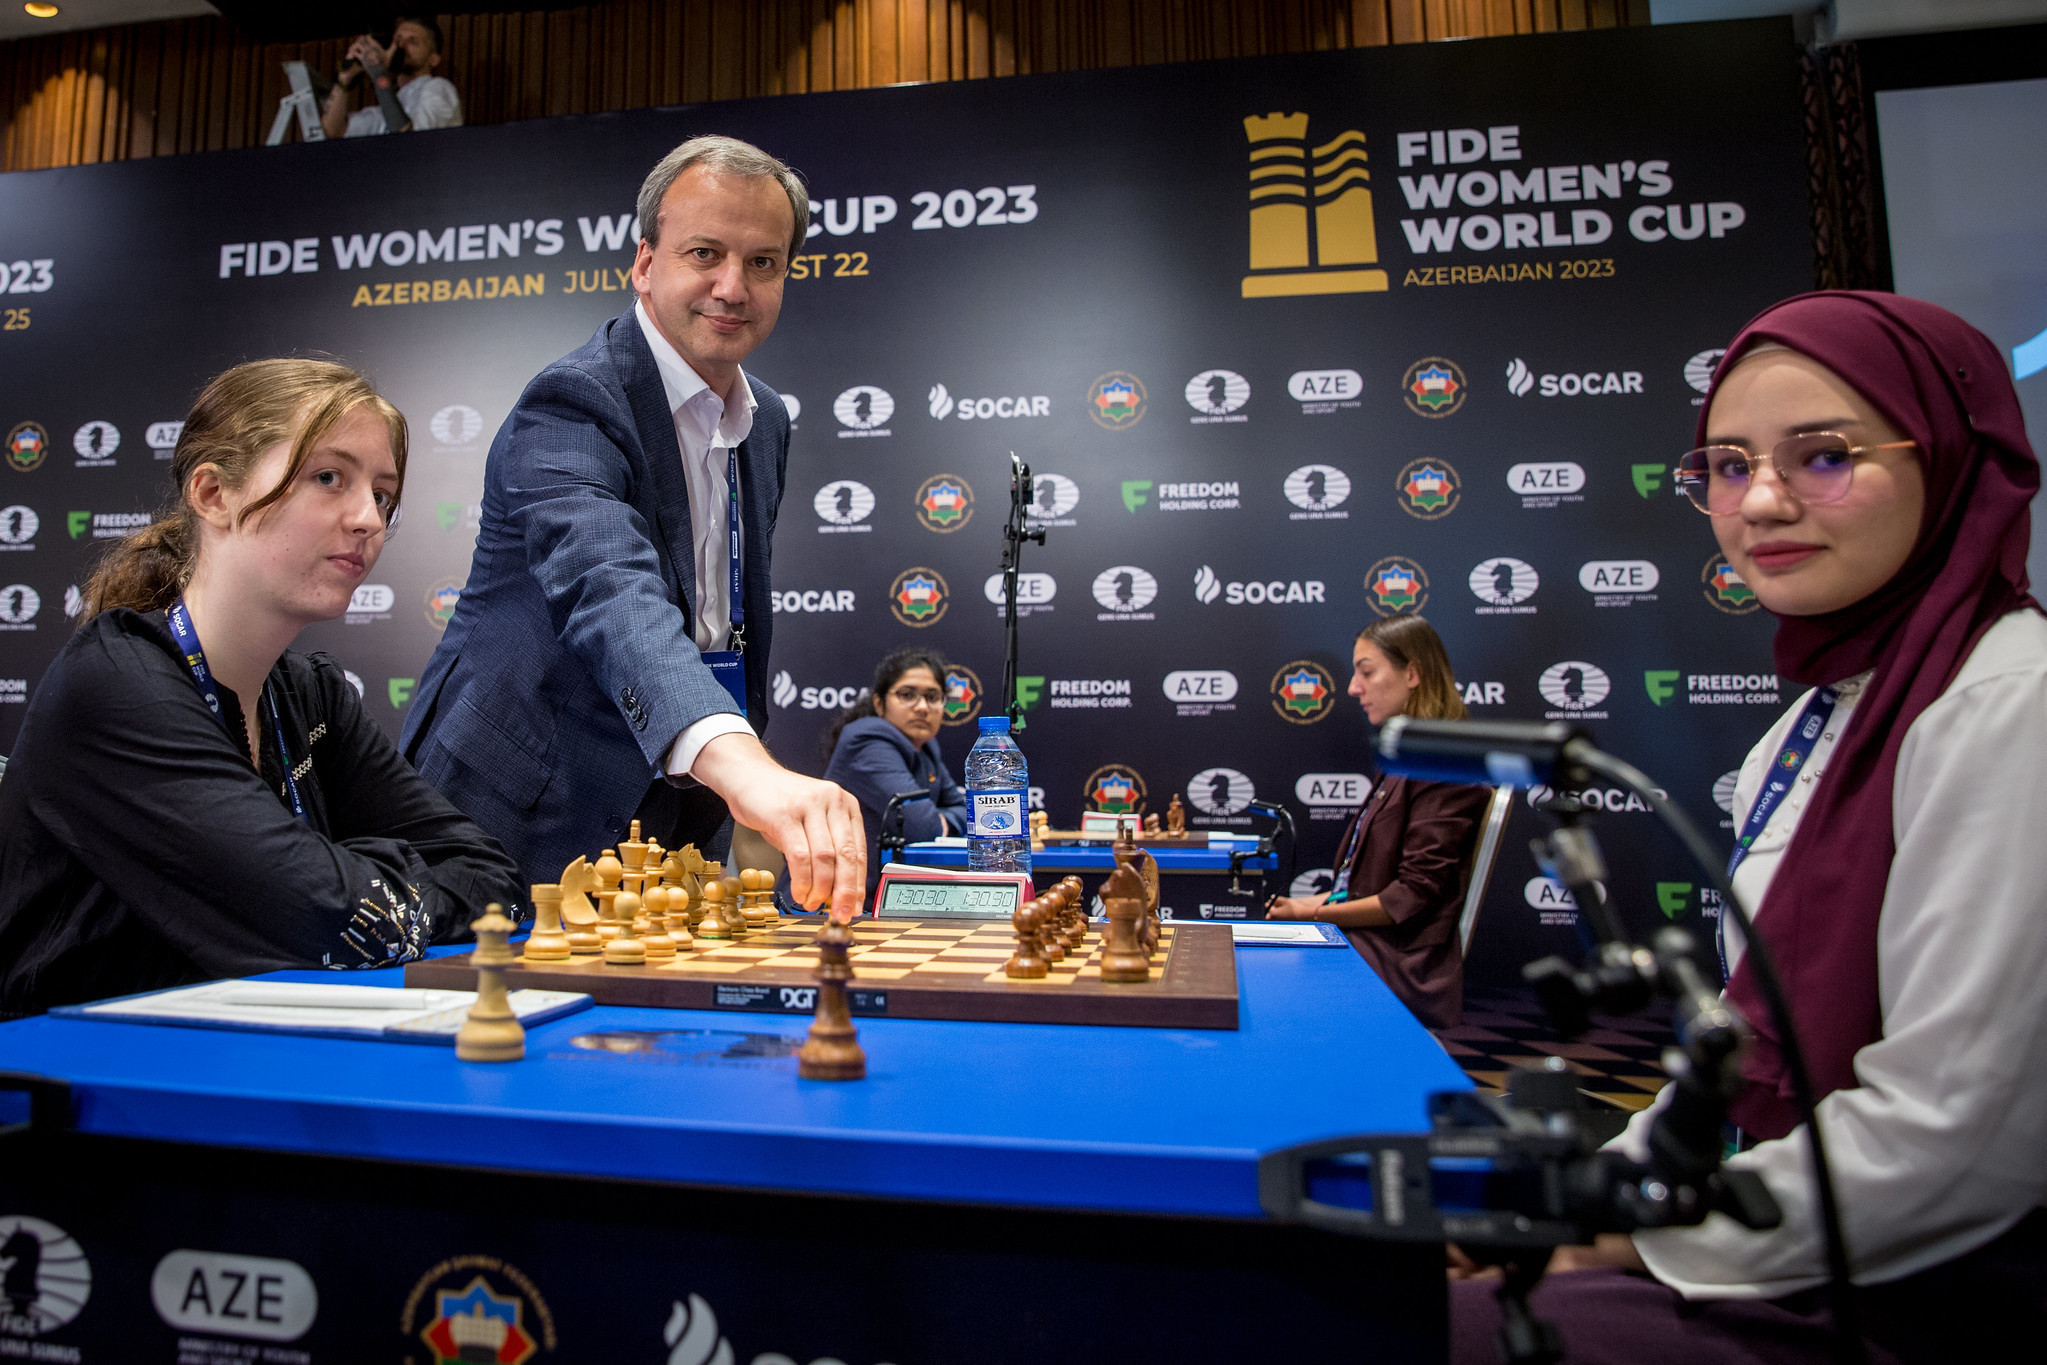 FIDE President Arkady Dvorkovich made the first move in the FIDE Women’s World Cup©FIDE/Anna Shtourman